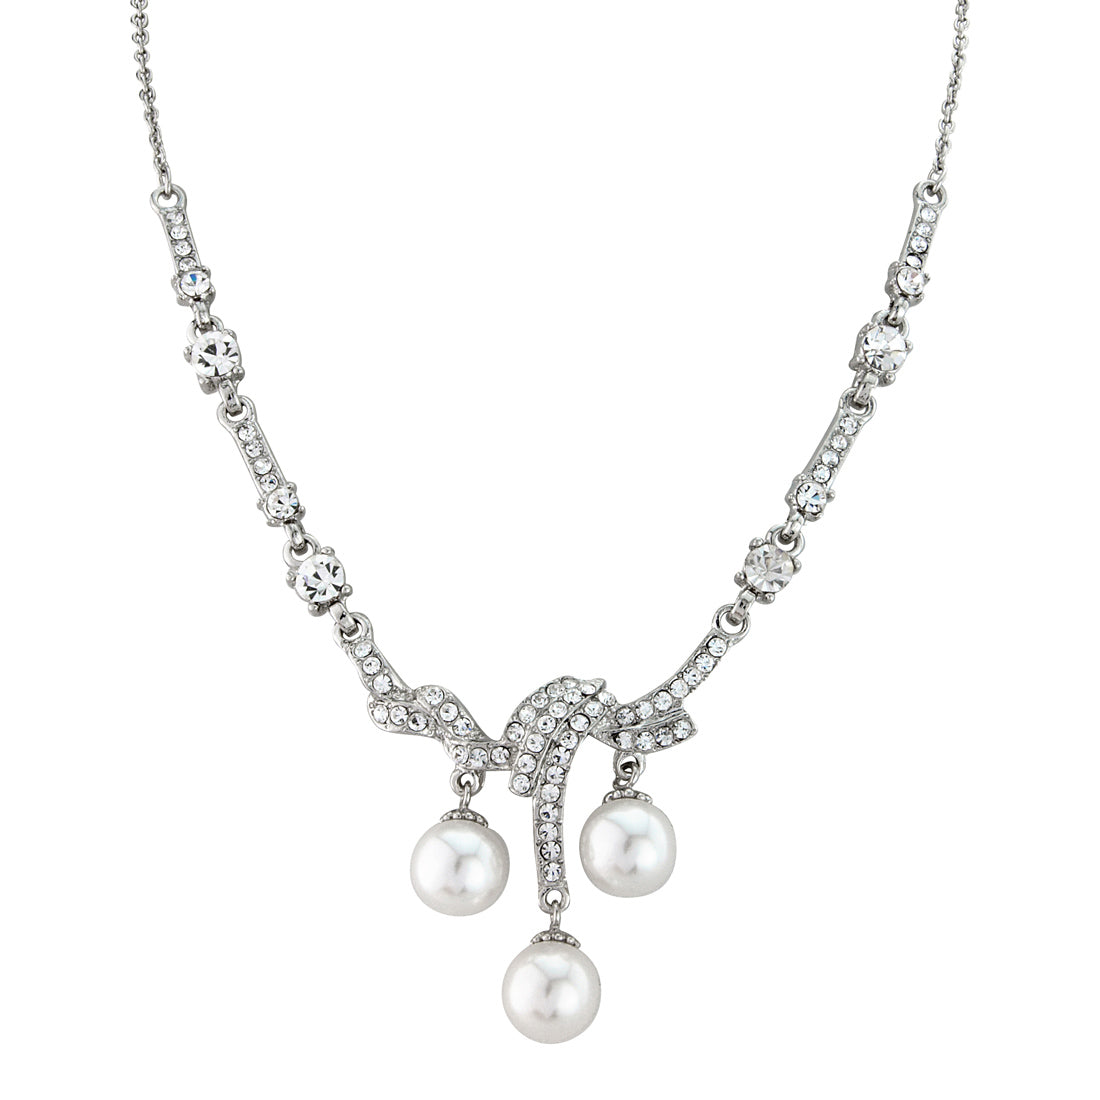 Vintage Elegance Crystal and Pearl Drop Necklace